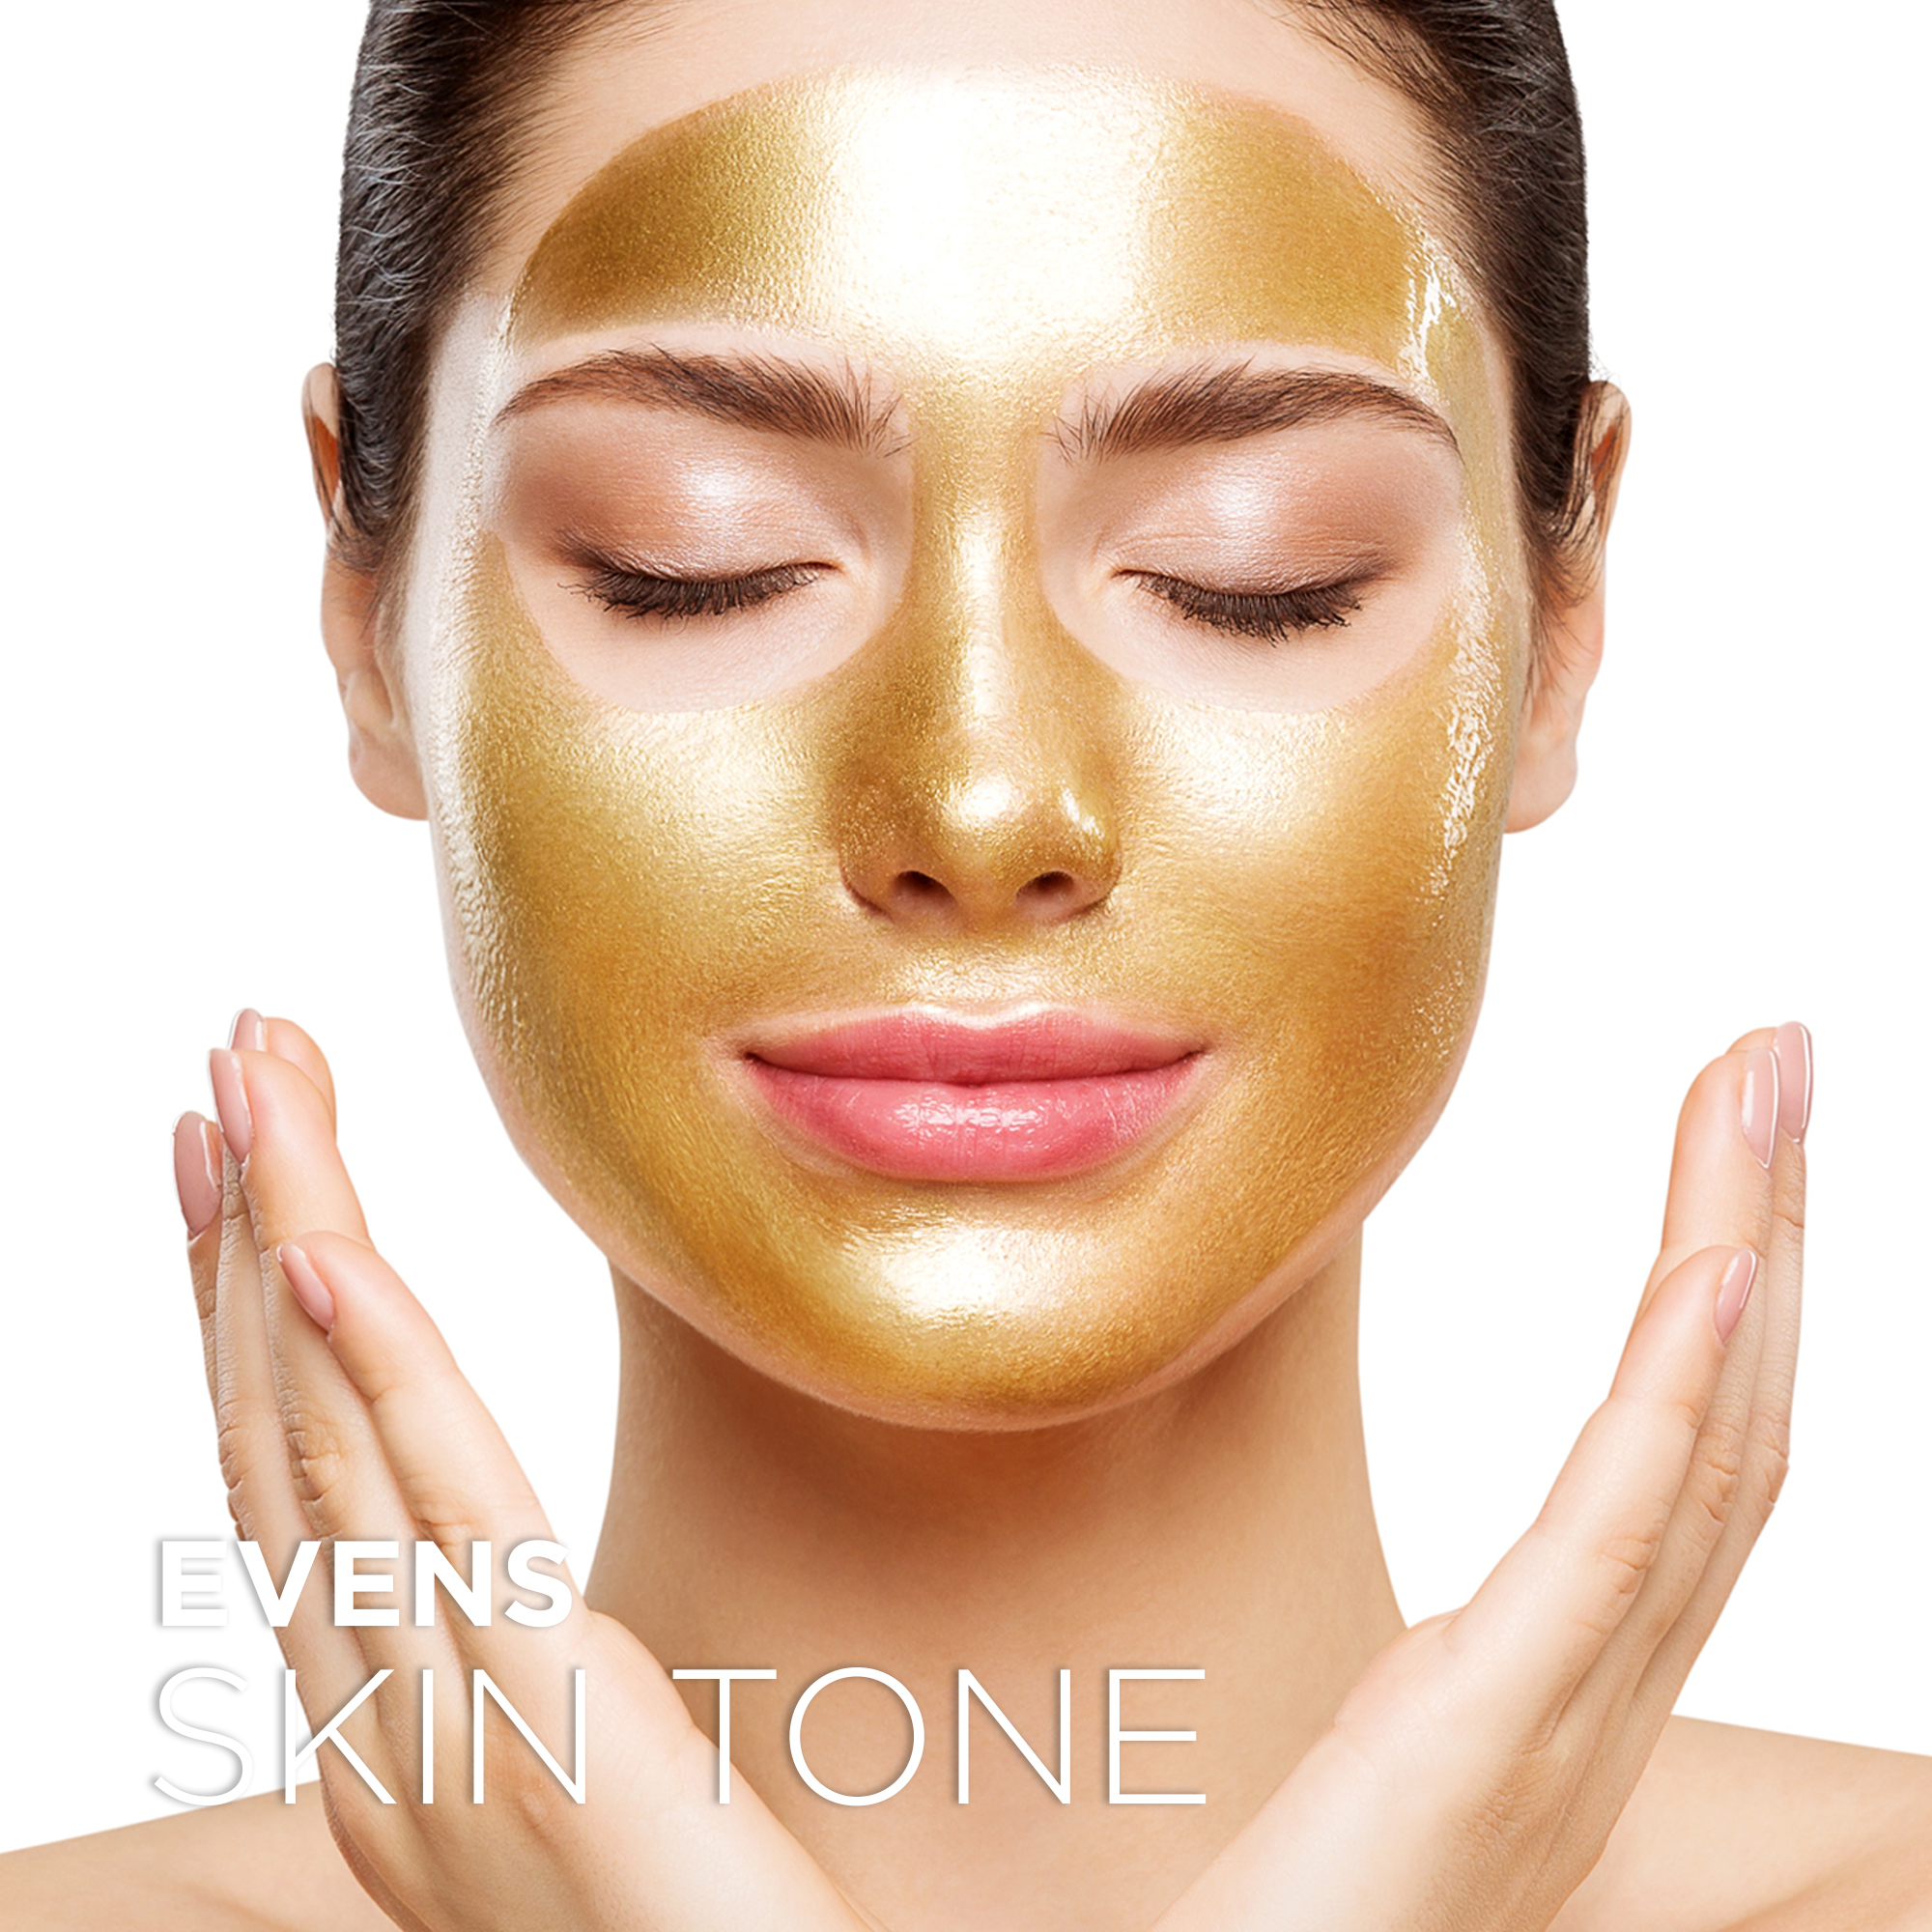 AZURE 24K Gold Metallic Firming Peel Off Face Mask - Exfoliates Blackheads, Dirt & Oils | Firms & Moisturizes | Reduces Wrinkles, Fine Lines & Acne Scar | -150mL - image 2 of 7